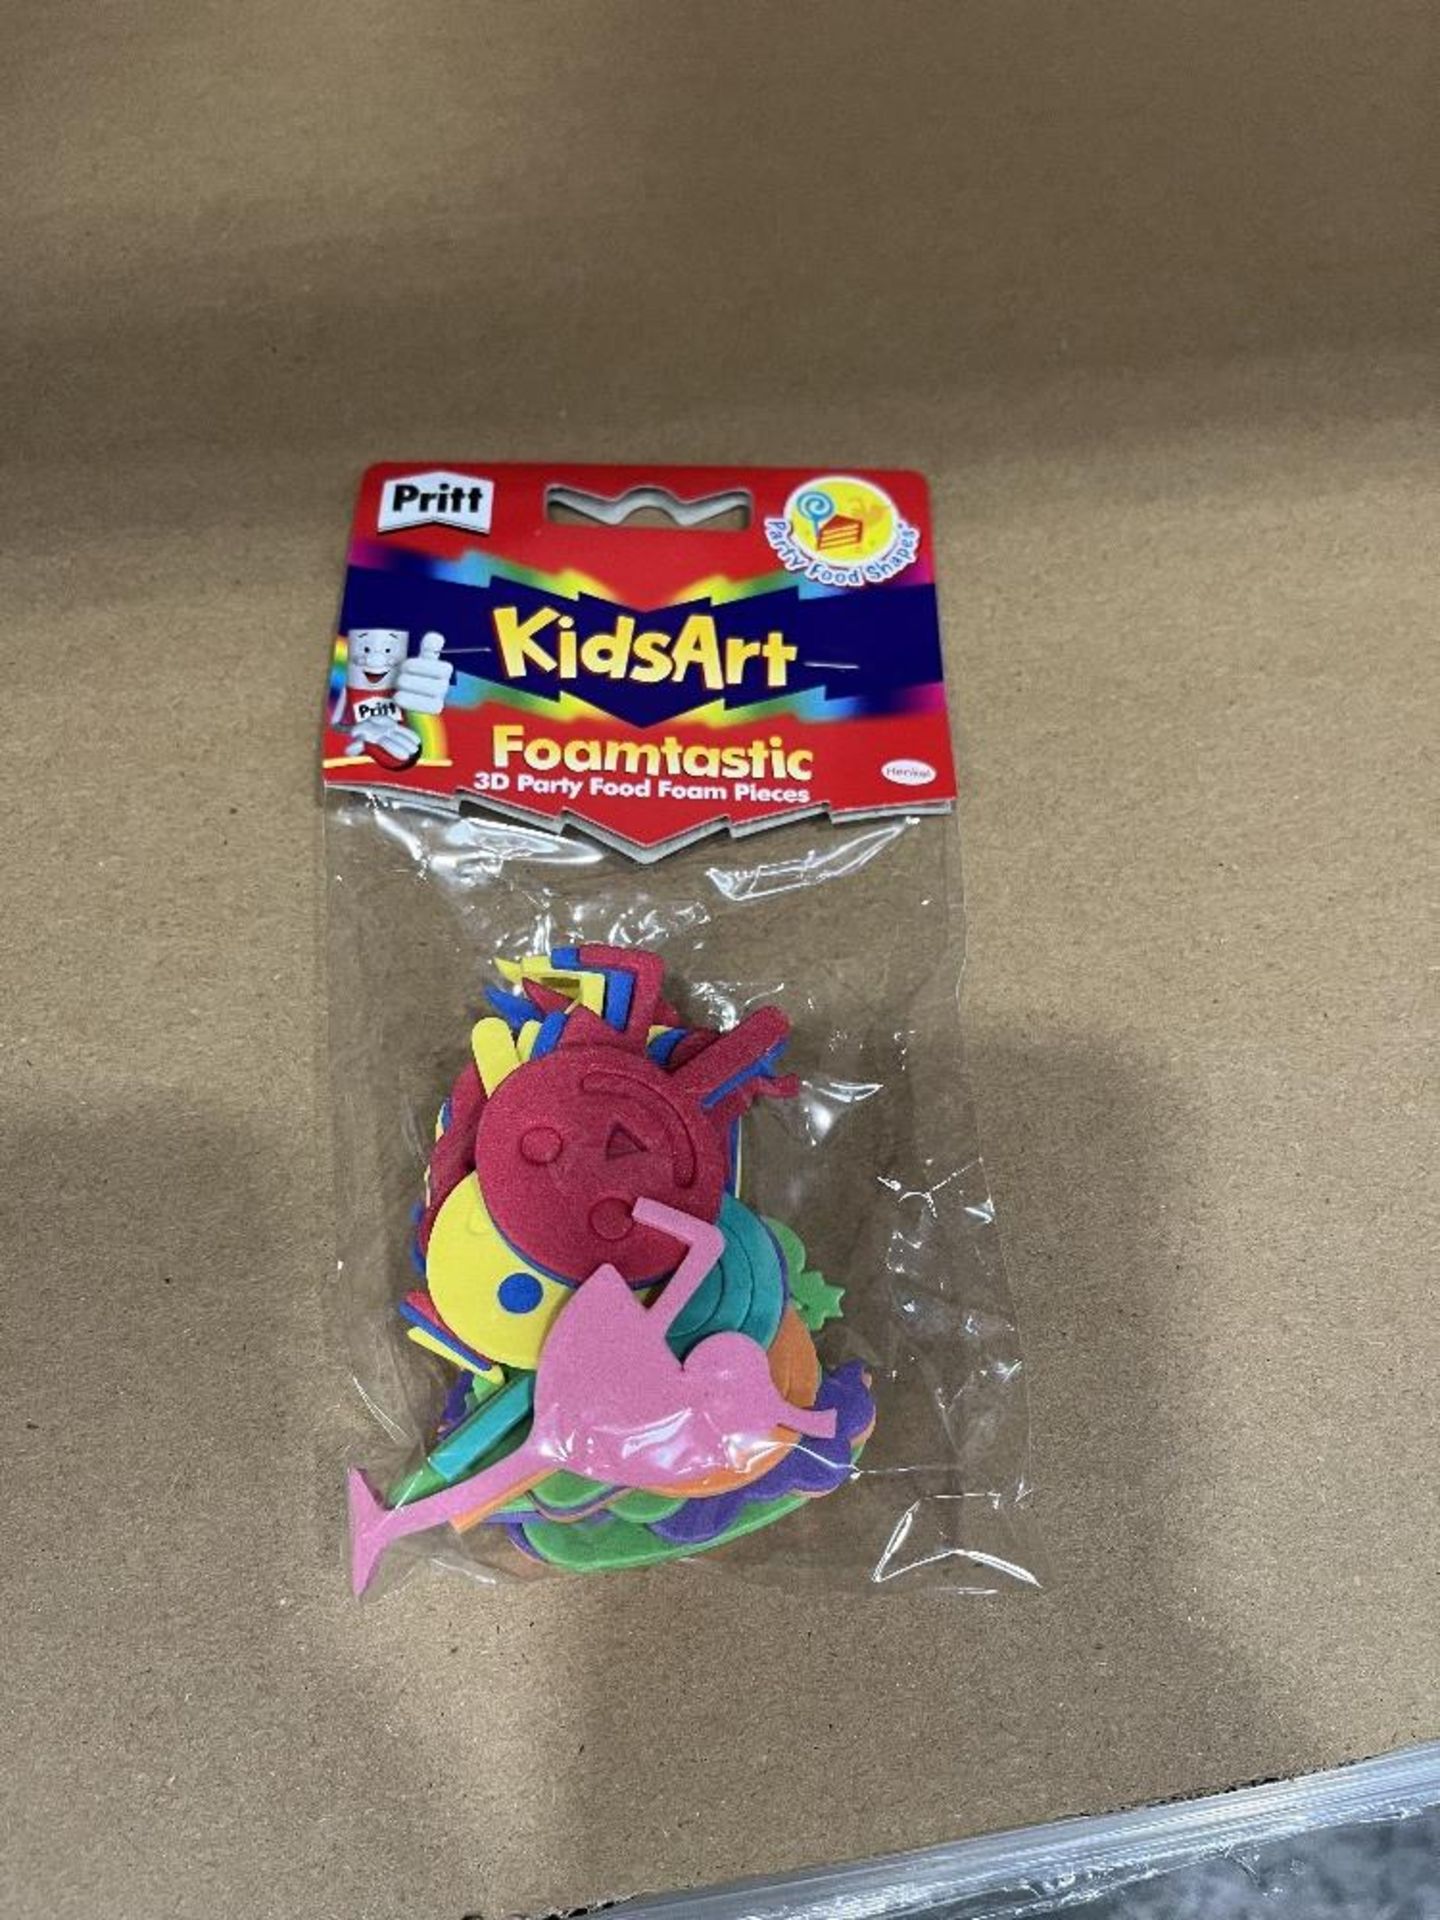 50 x Boxes Pritt KidsArt 3D Party Food Foam Pieces (12 Packs per Box)